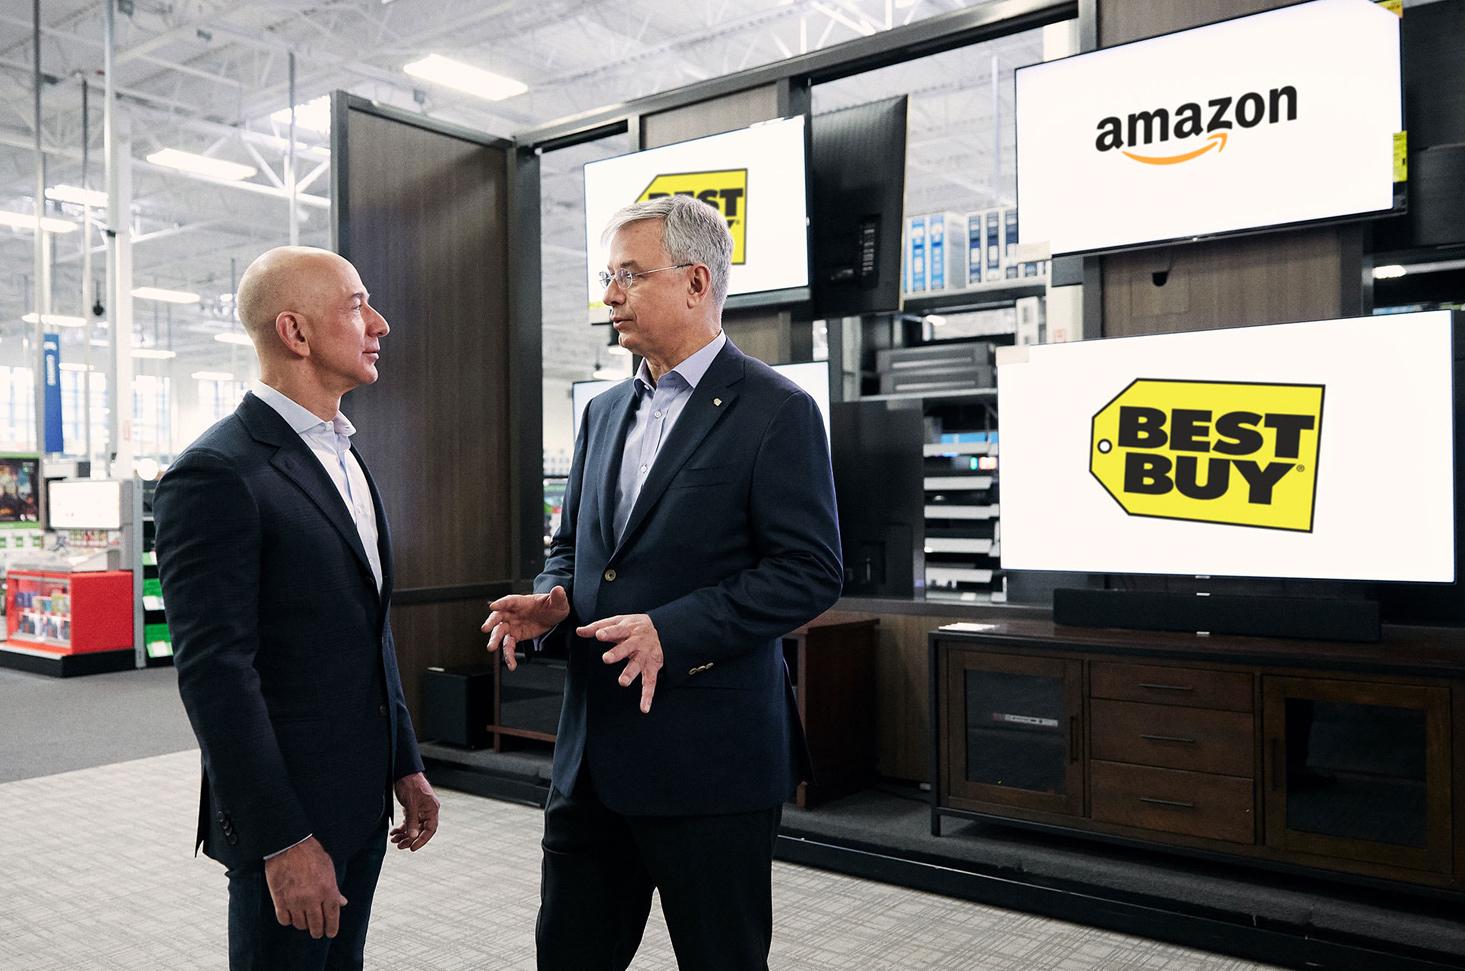 Best Buy and Amazon partnership brand marketing design